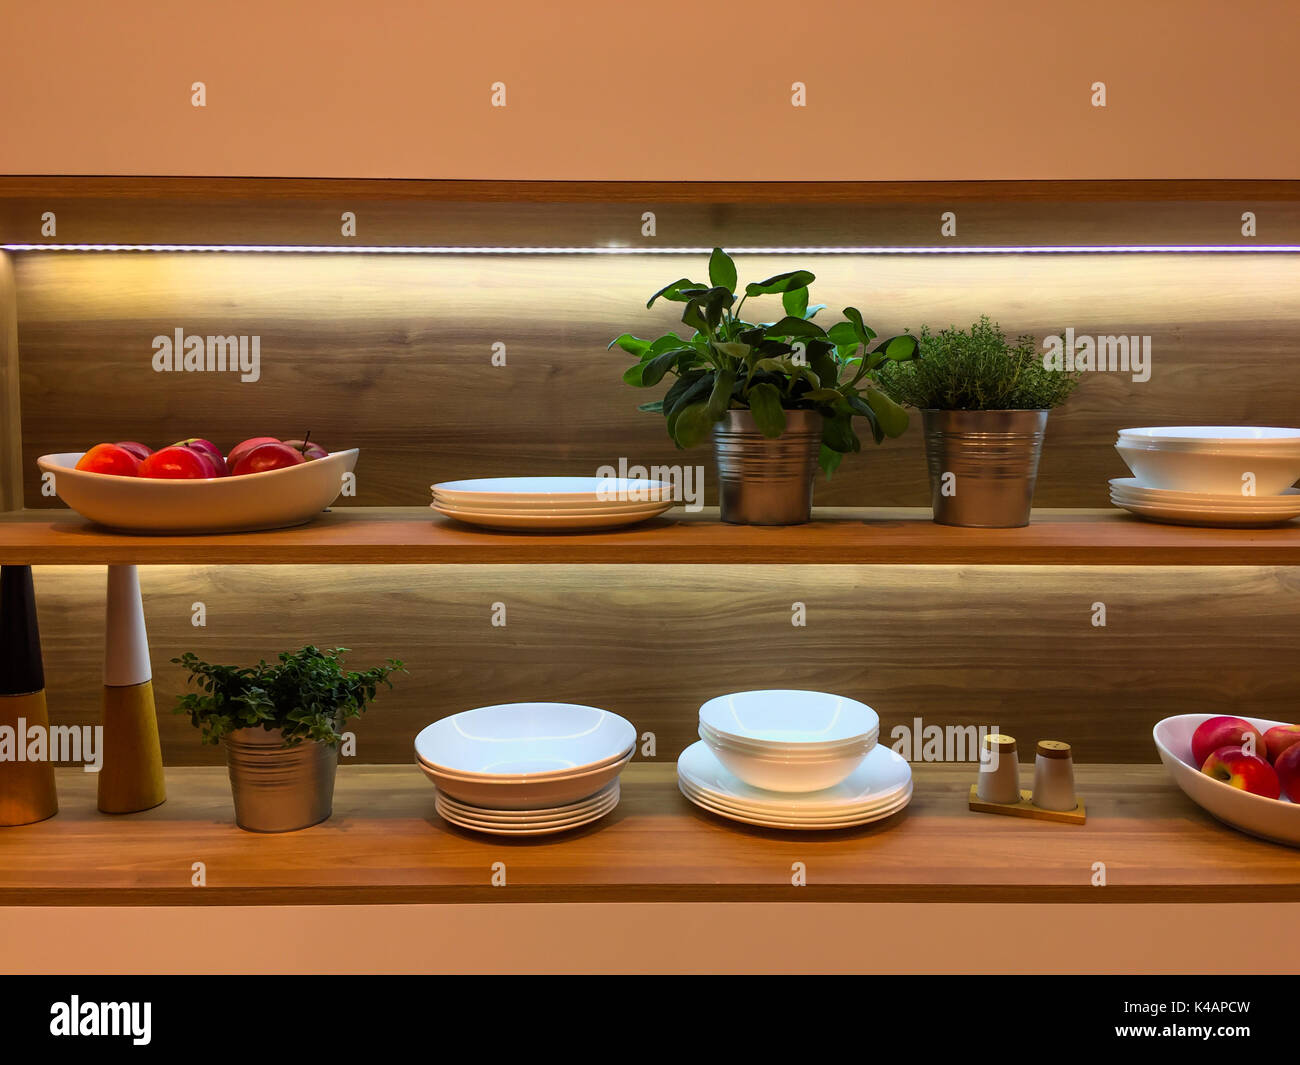 https://c8.alamy.com/comp/K4APCW/kitchen-filled-shelf-with-backlight-nice-interior-wooden-design-K4APCW.jpg